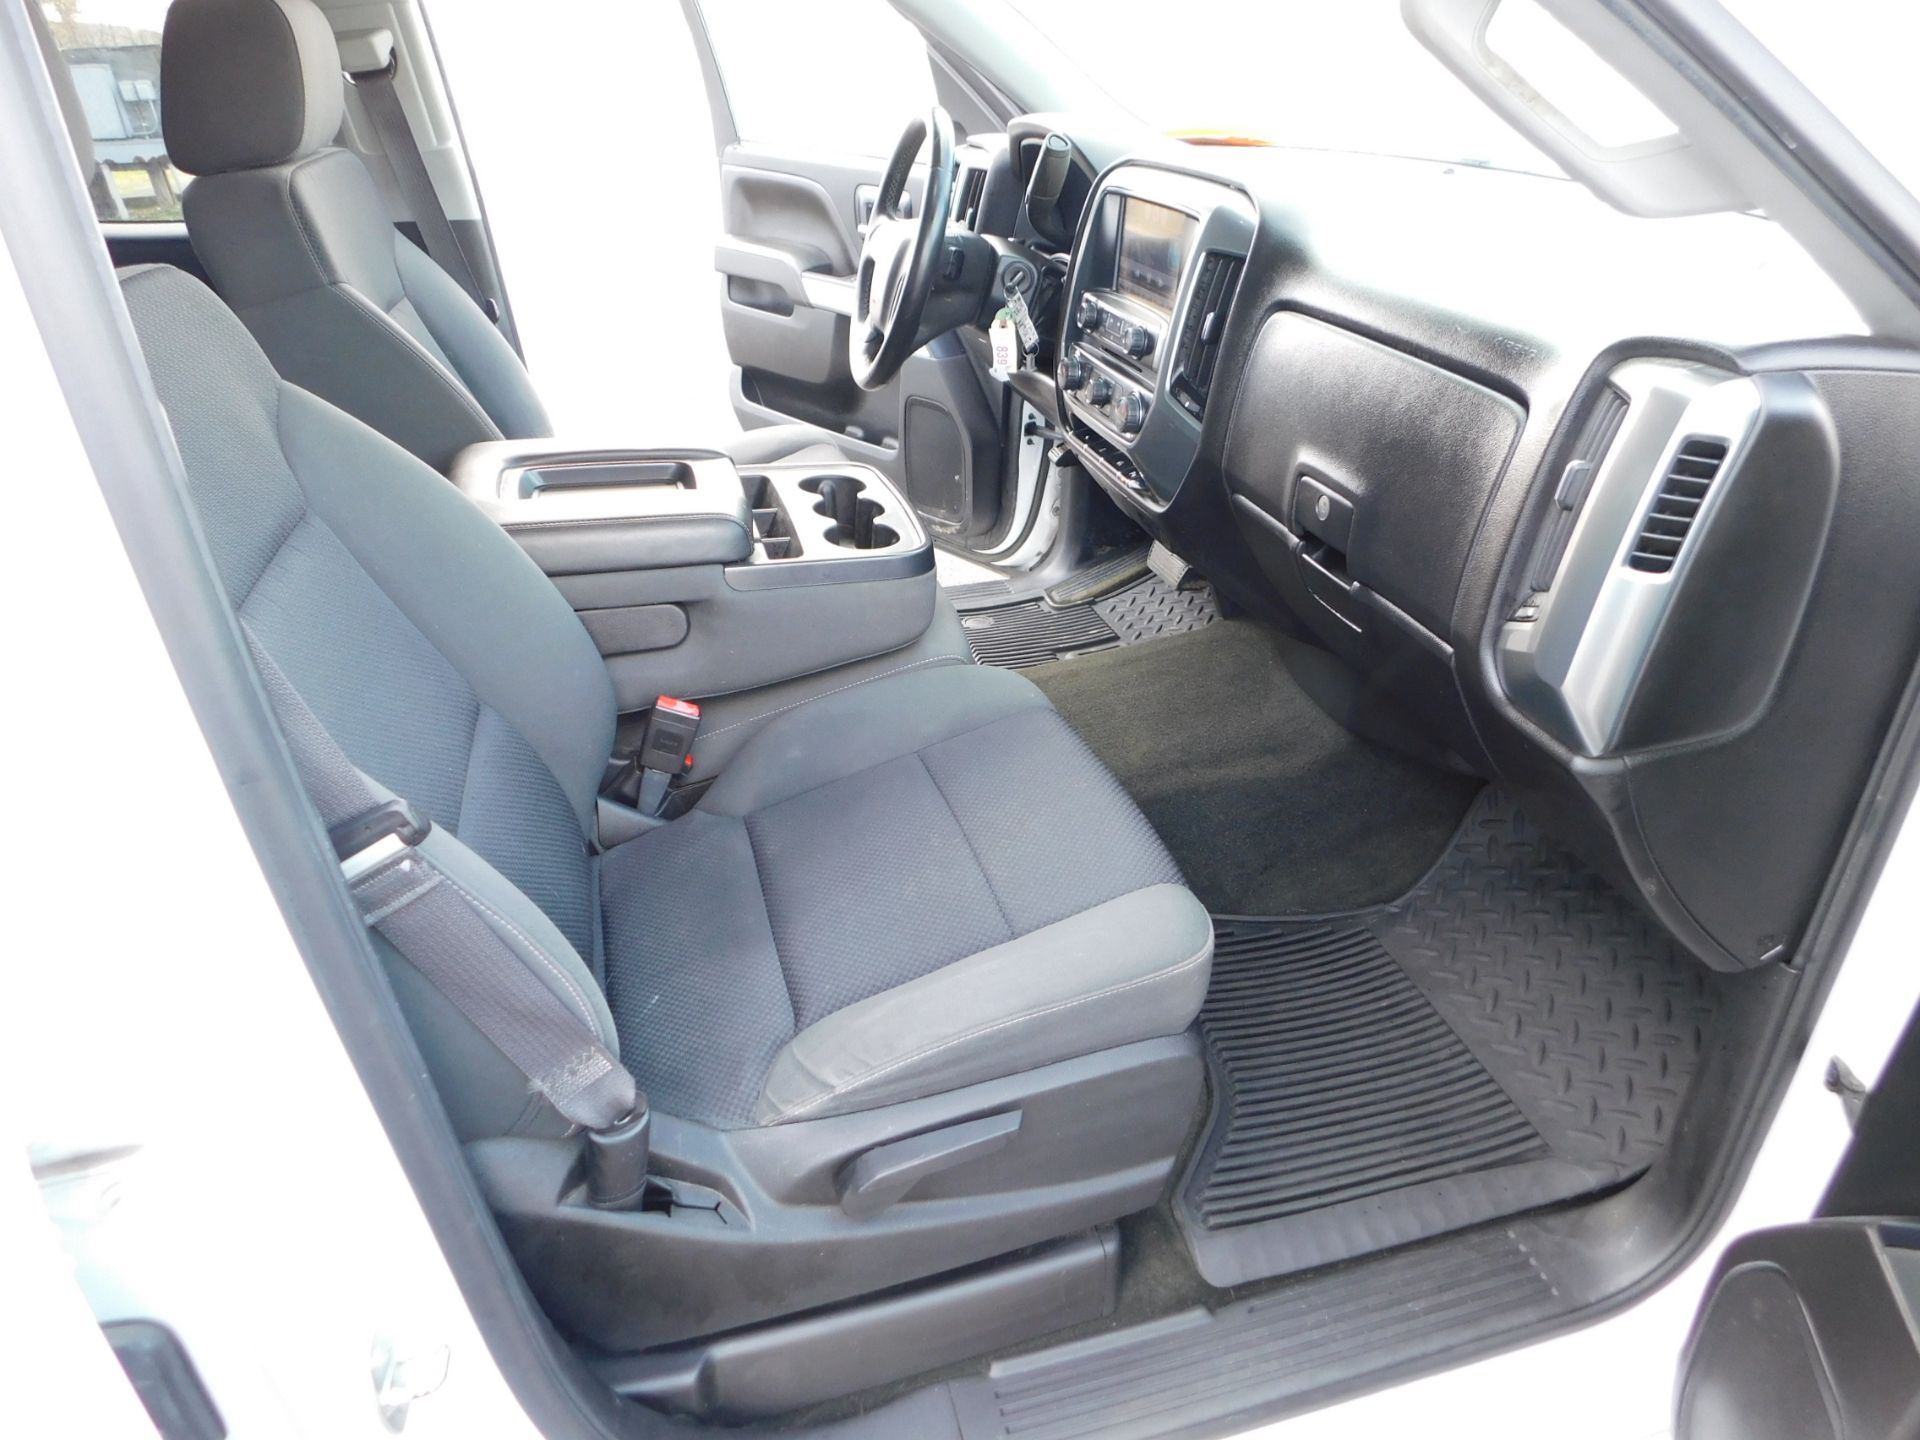 2014 Chevrolet Silverado LT Pickup, VIN 1GCVKREC3EZ139405, 4-Door 4 WD, Automatic, AM/FM, AC, Cruise - Image 41 of 51